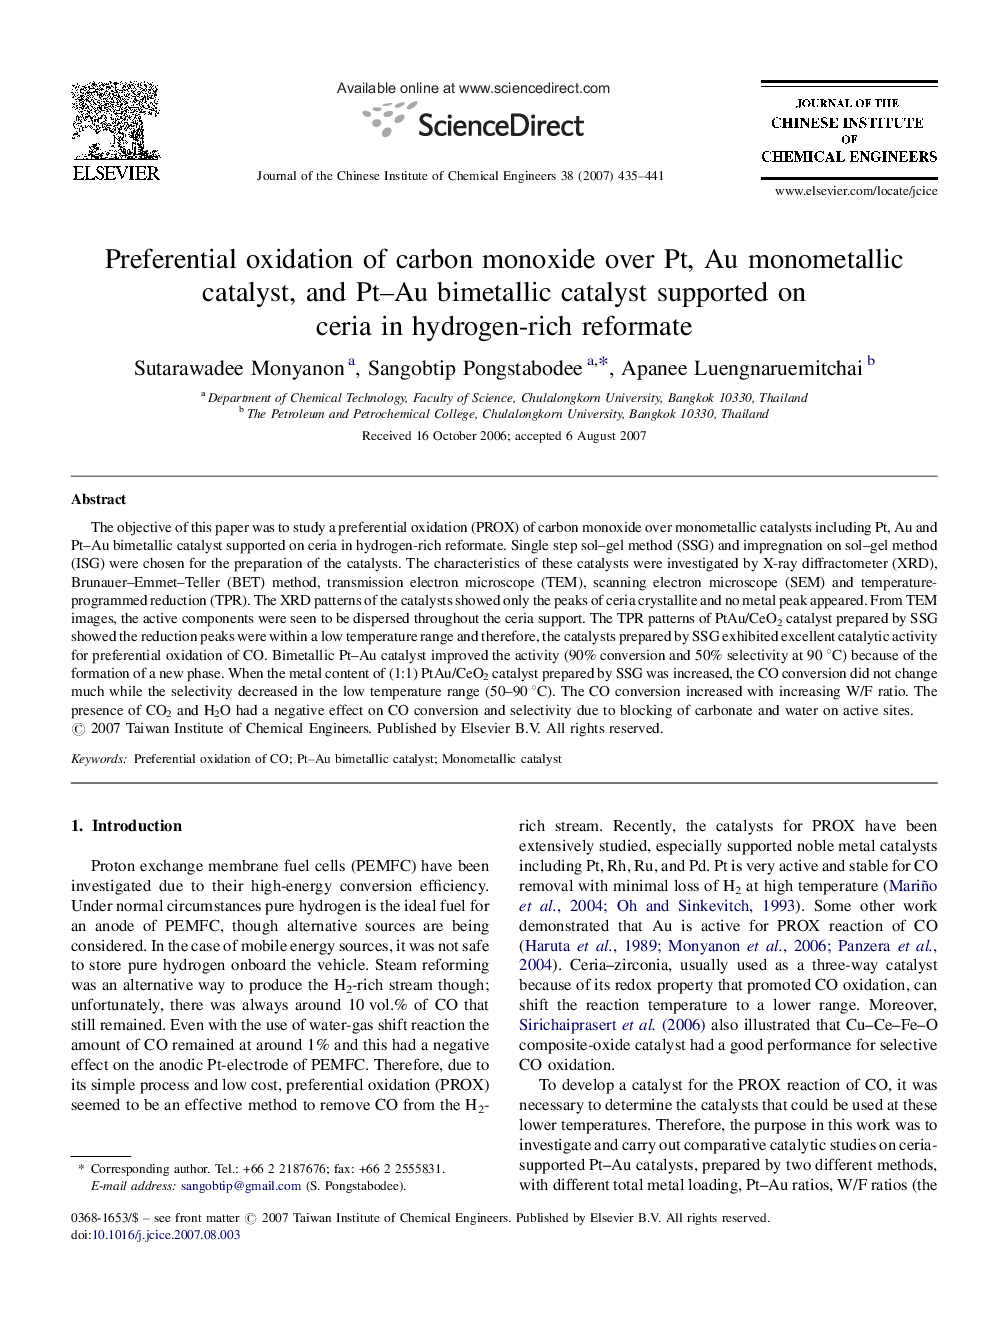 Preferential oxidation of carbon monoxide over Pt, Au monometallic catalyst, and Pt–Au bimetallic catalyst supported on ceria in hydrogen-rich reformate